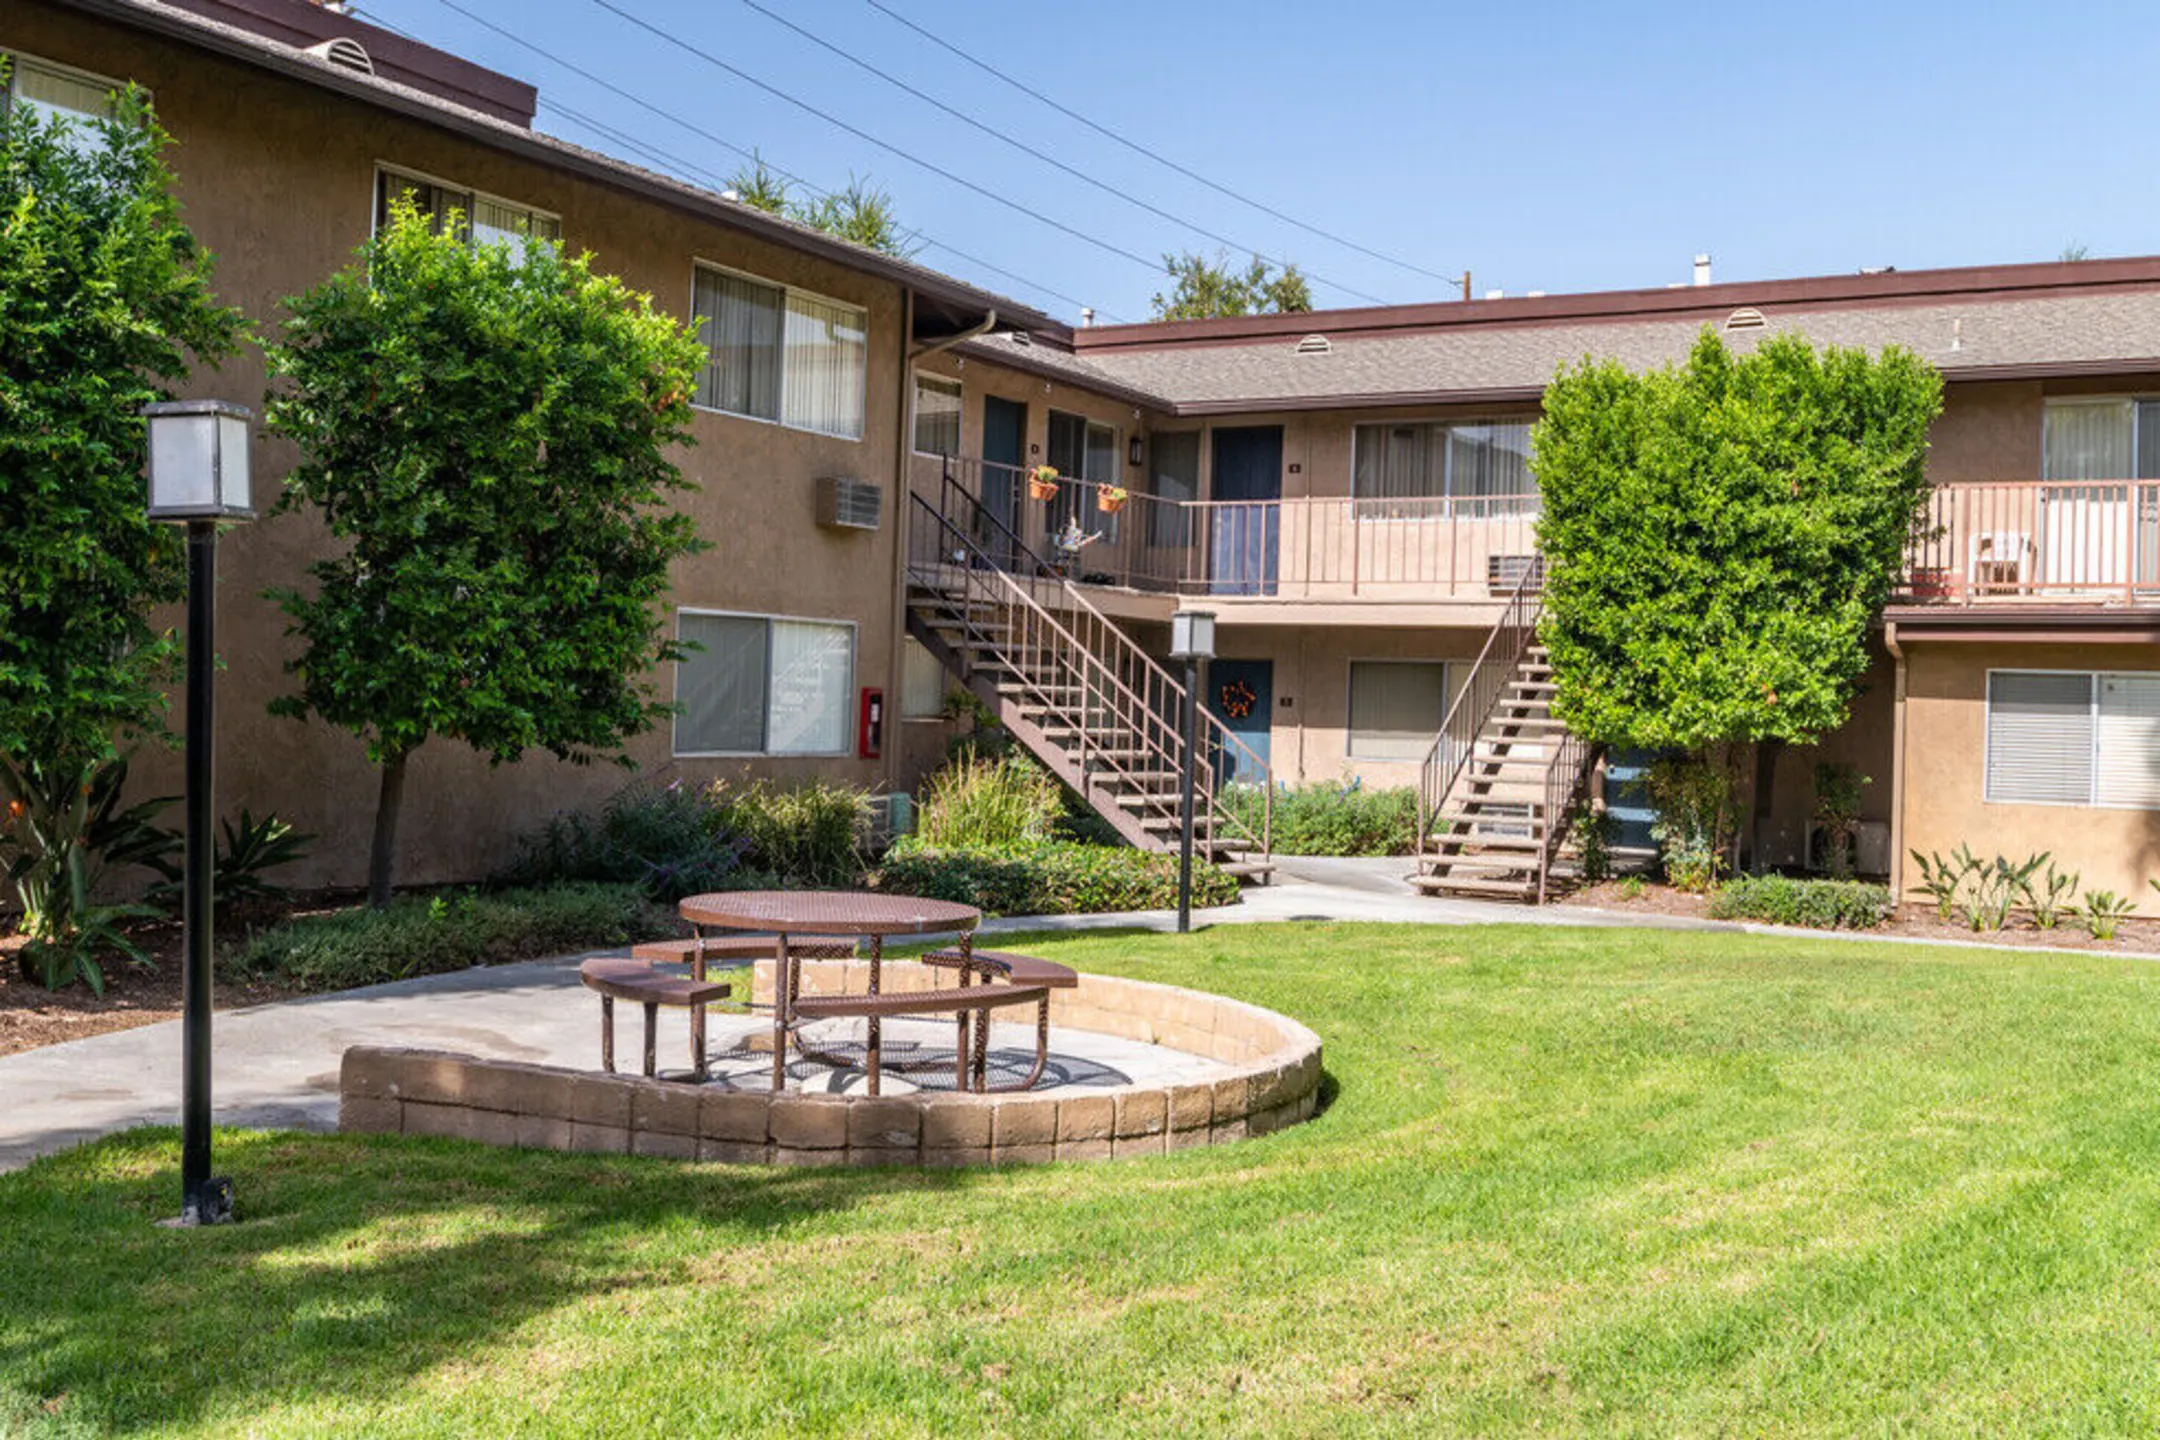 Building - Casa Sierra Apartment Homes - Riverside, CA